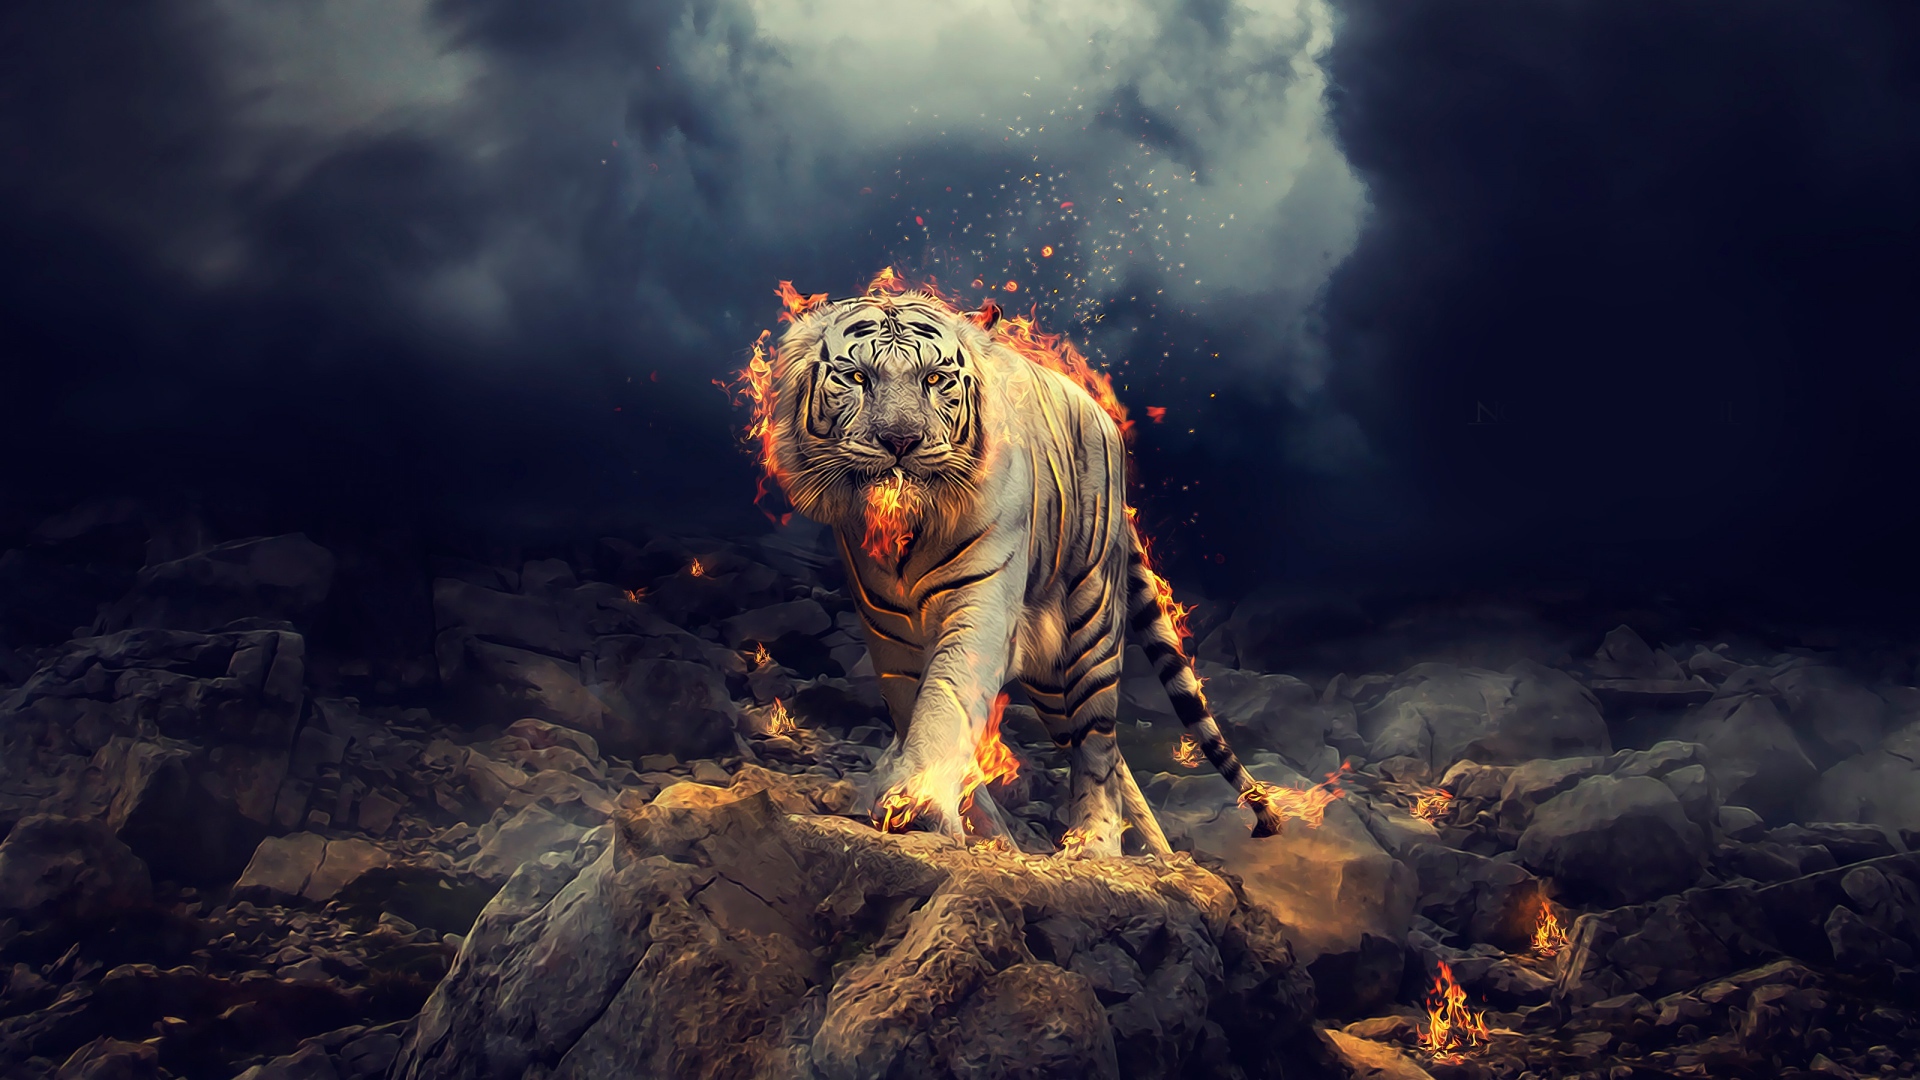 The fire tiger walks the rocks